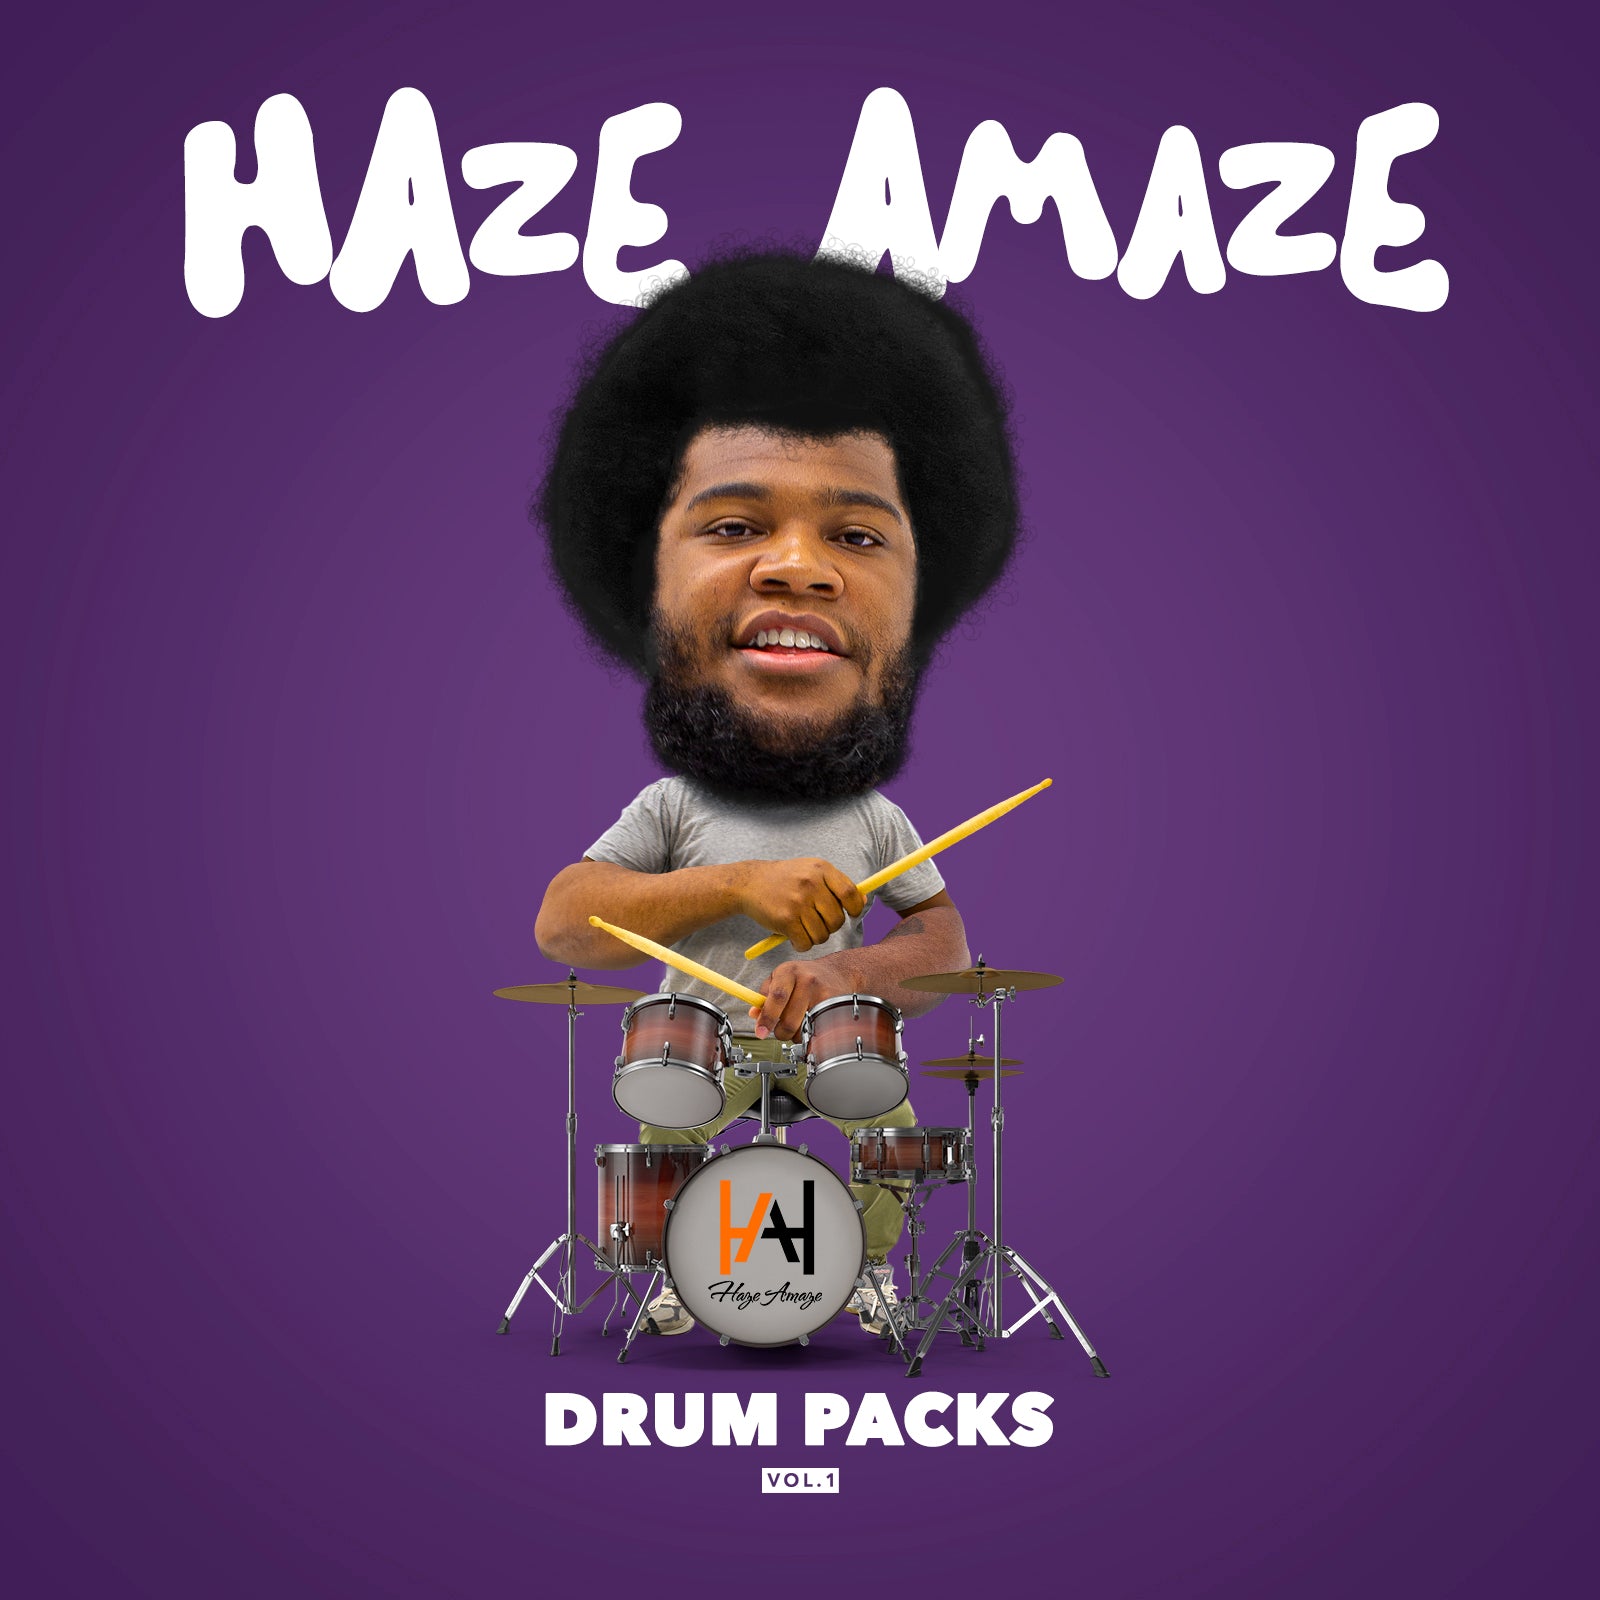 THE COMPLETE Haze Amaze Drum Pack - Volume 1